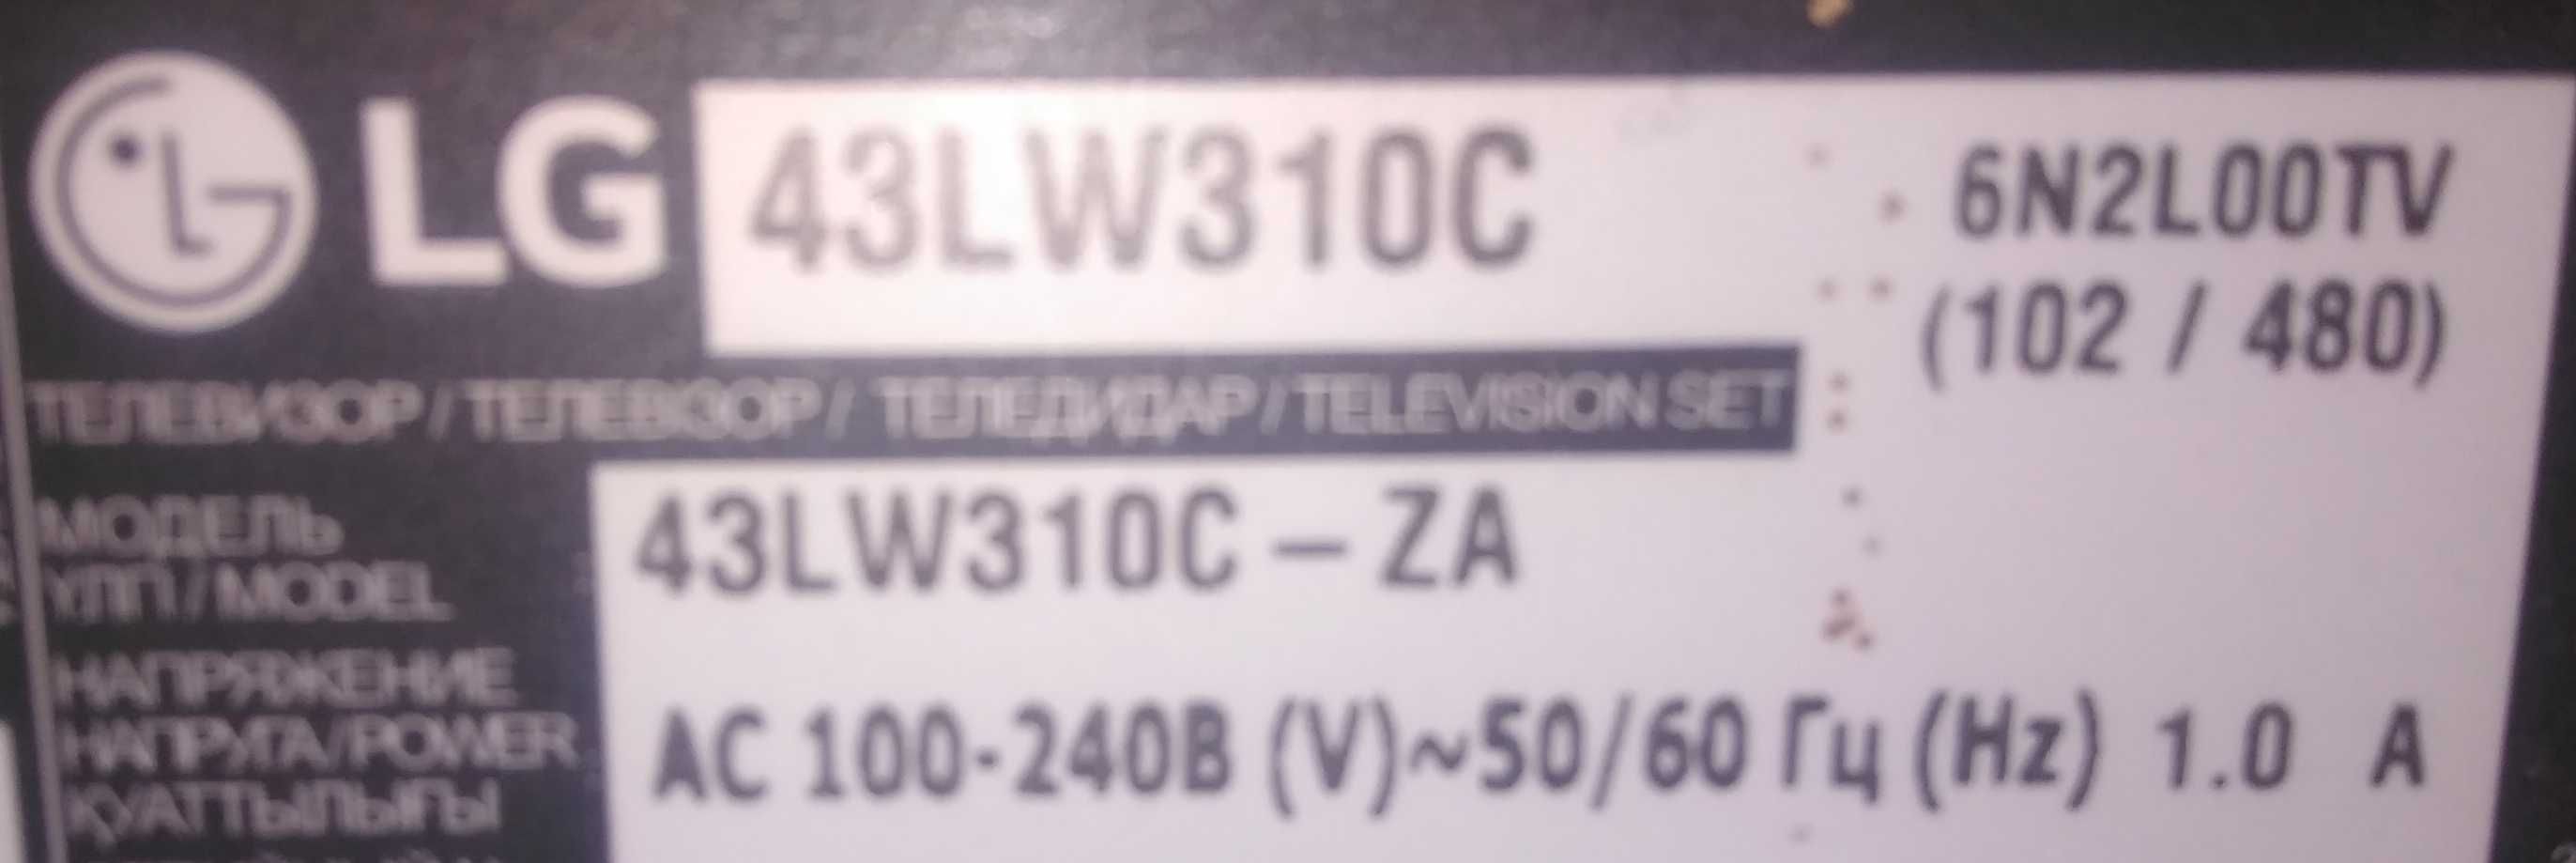 продам тв телевизор LG бита матриця 43LW310C 43LT340C0ZB